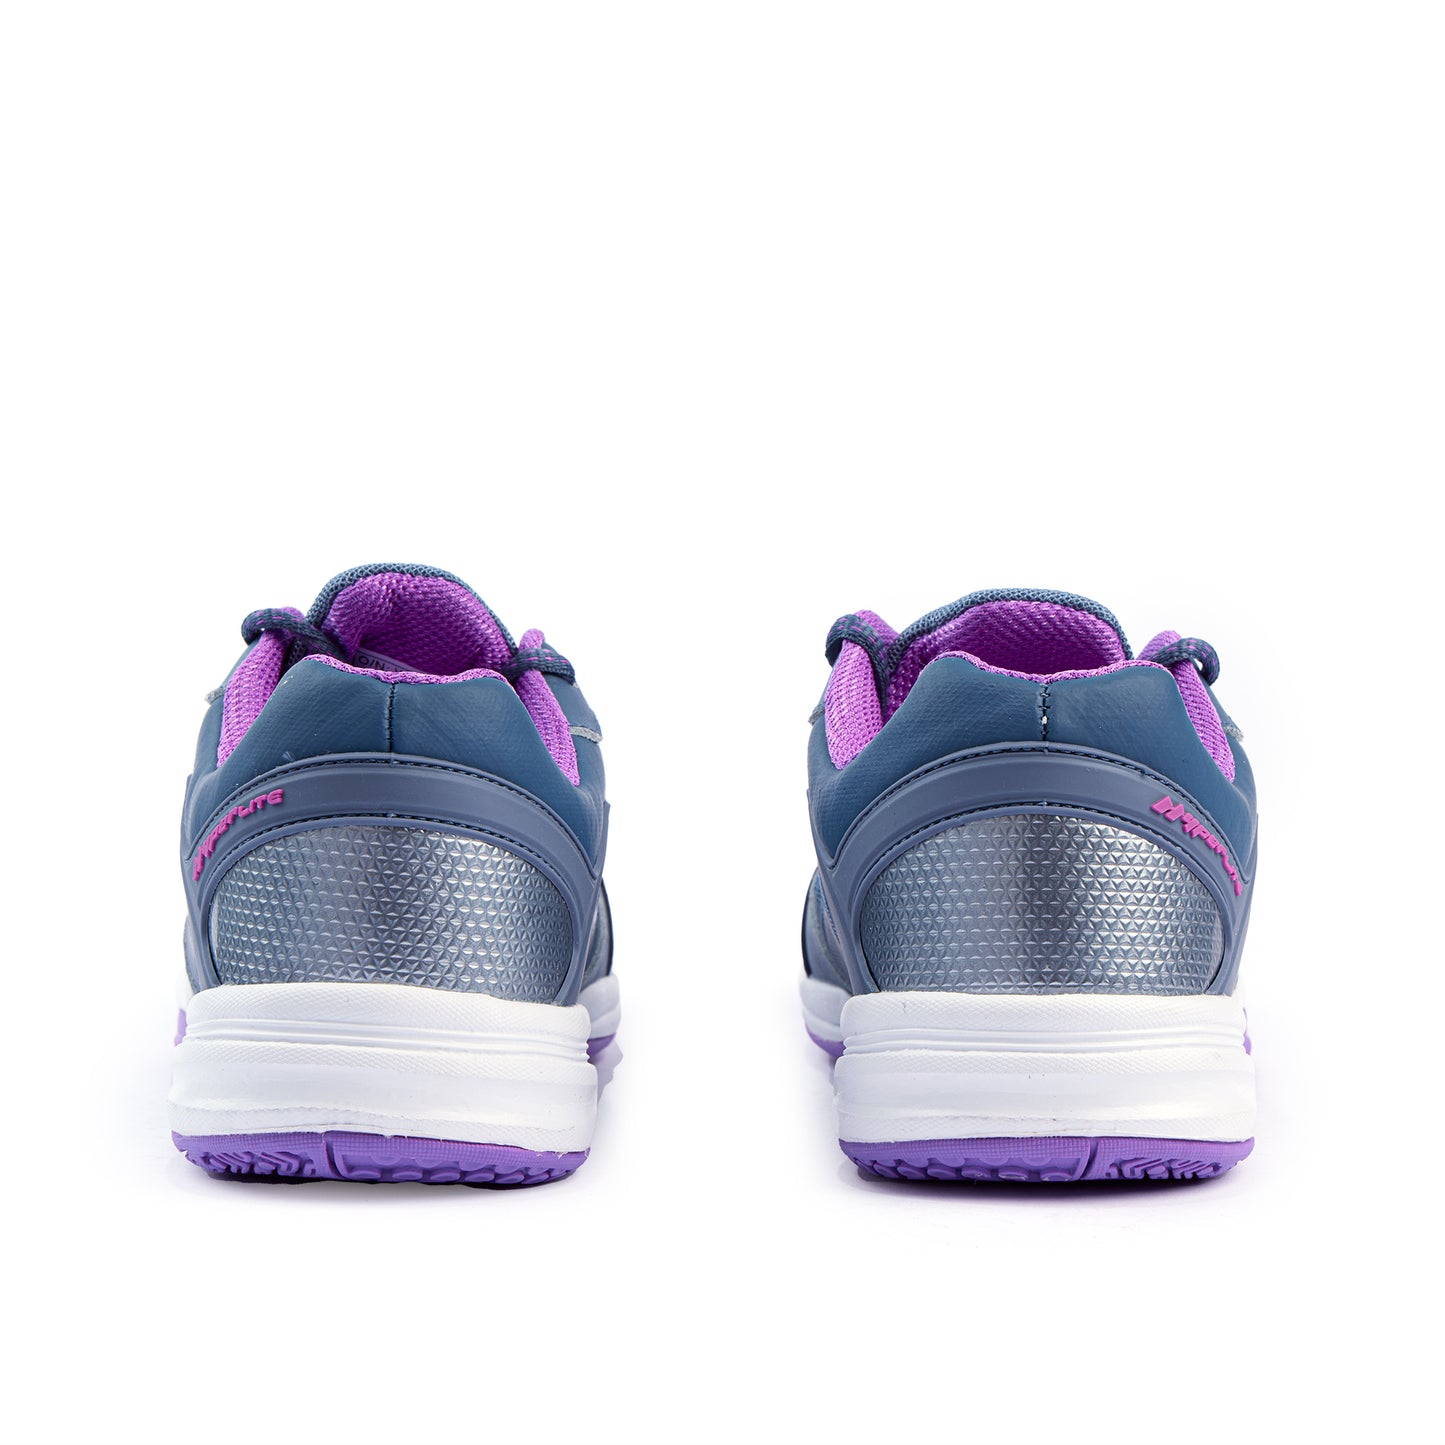 Defend Senior Netball Shoes - Steel/Purple